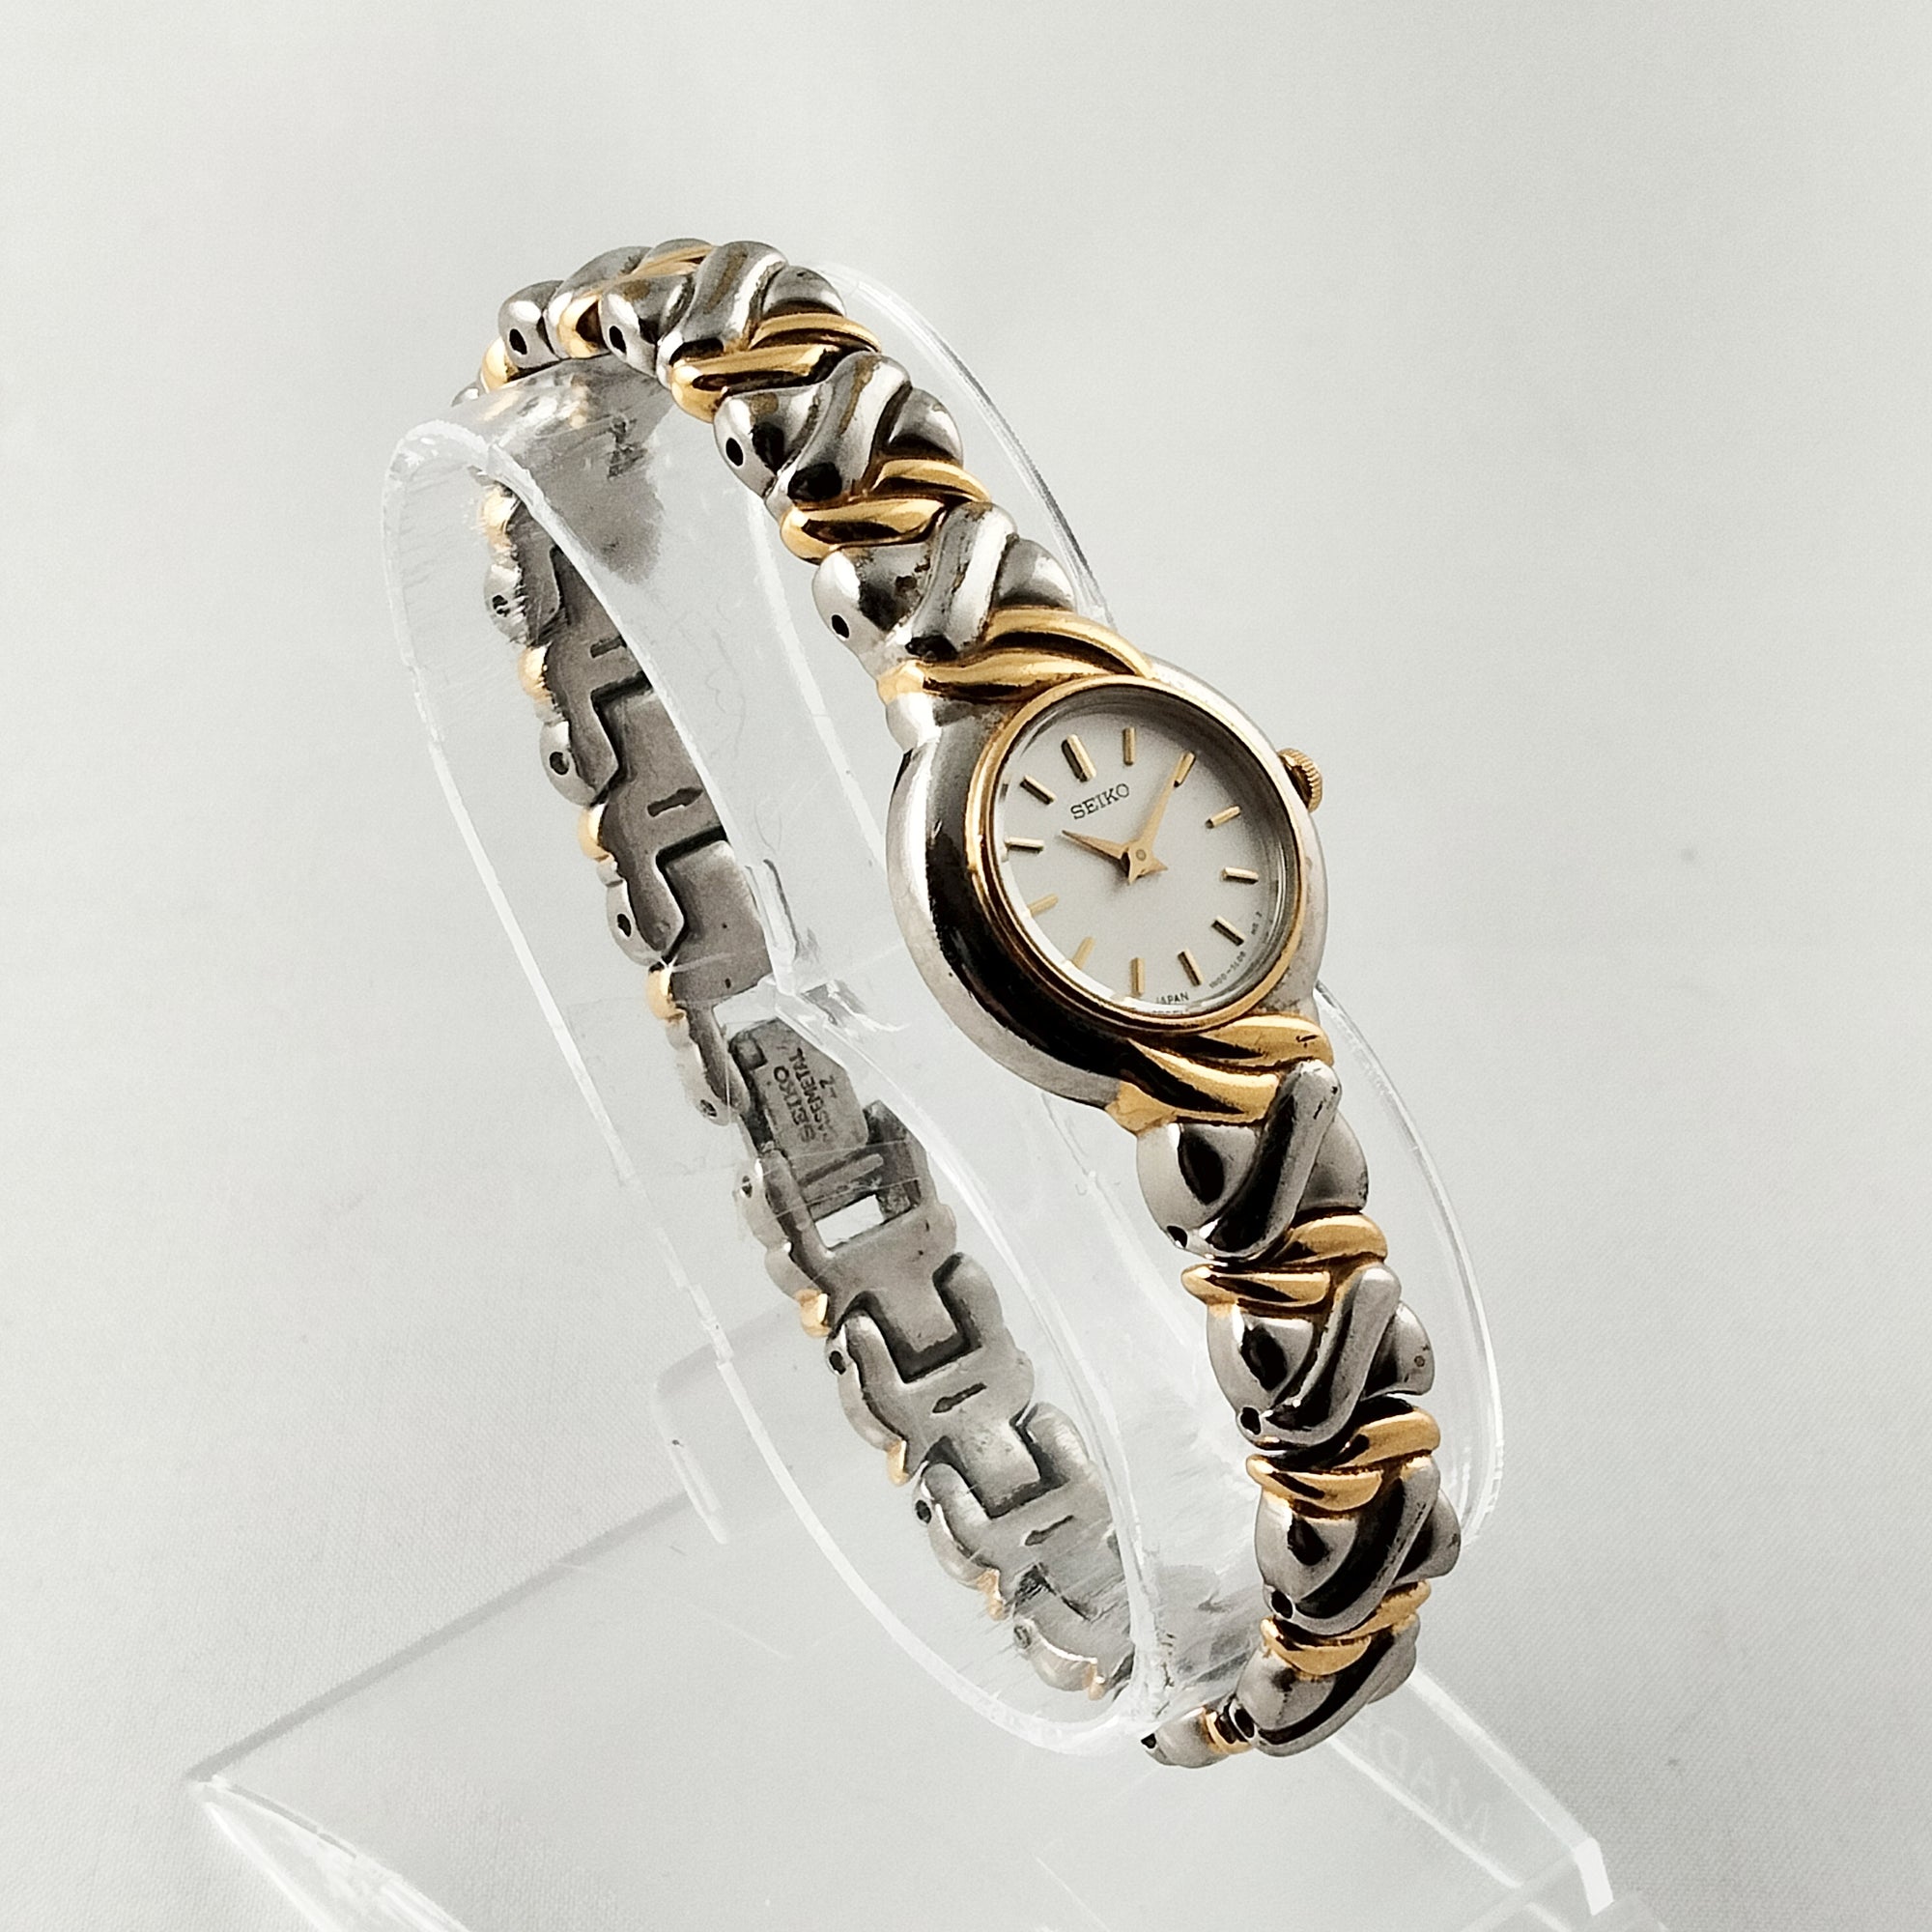 Seiko Women's Petite Silver and Gold Tone Watch, Bracelet Strap